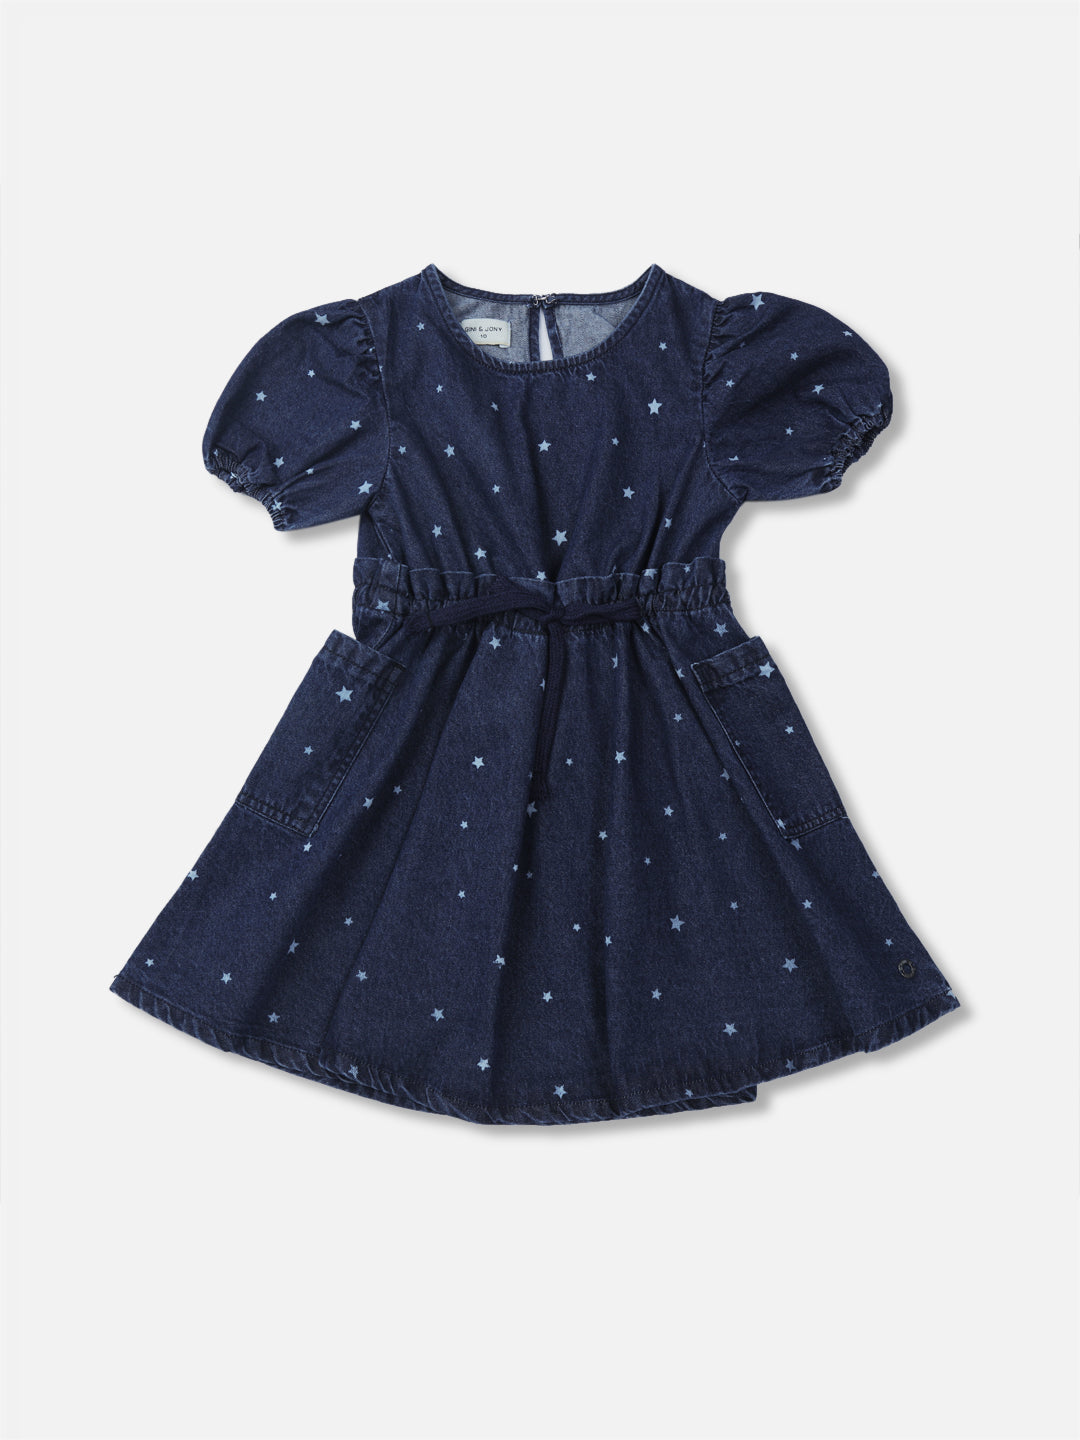 Girls Navy Blue Printed Denim Dress